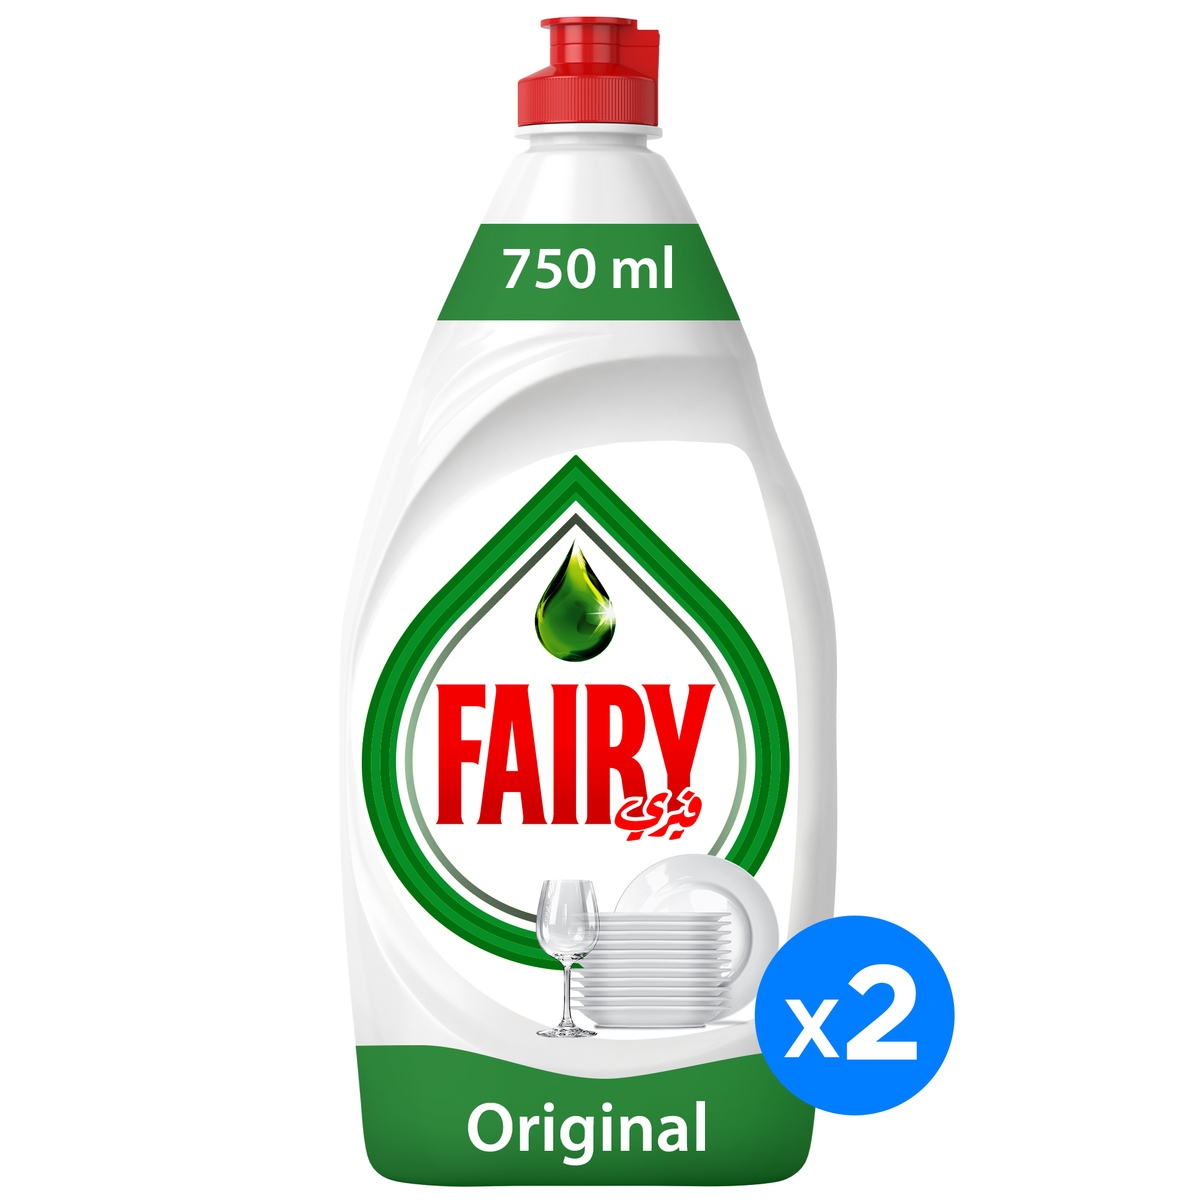 Fairy Dishwashing Liquid Soap Original 2 x 750ml